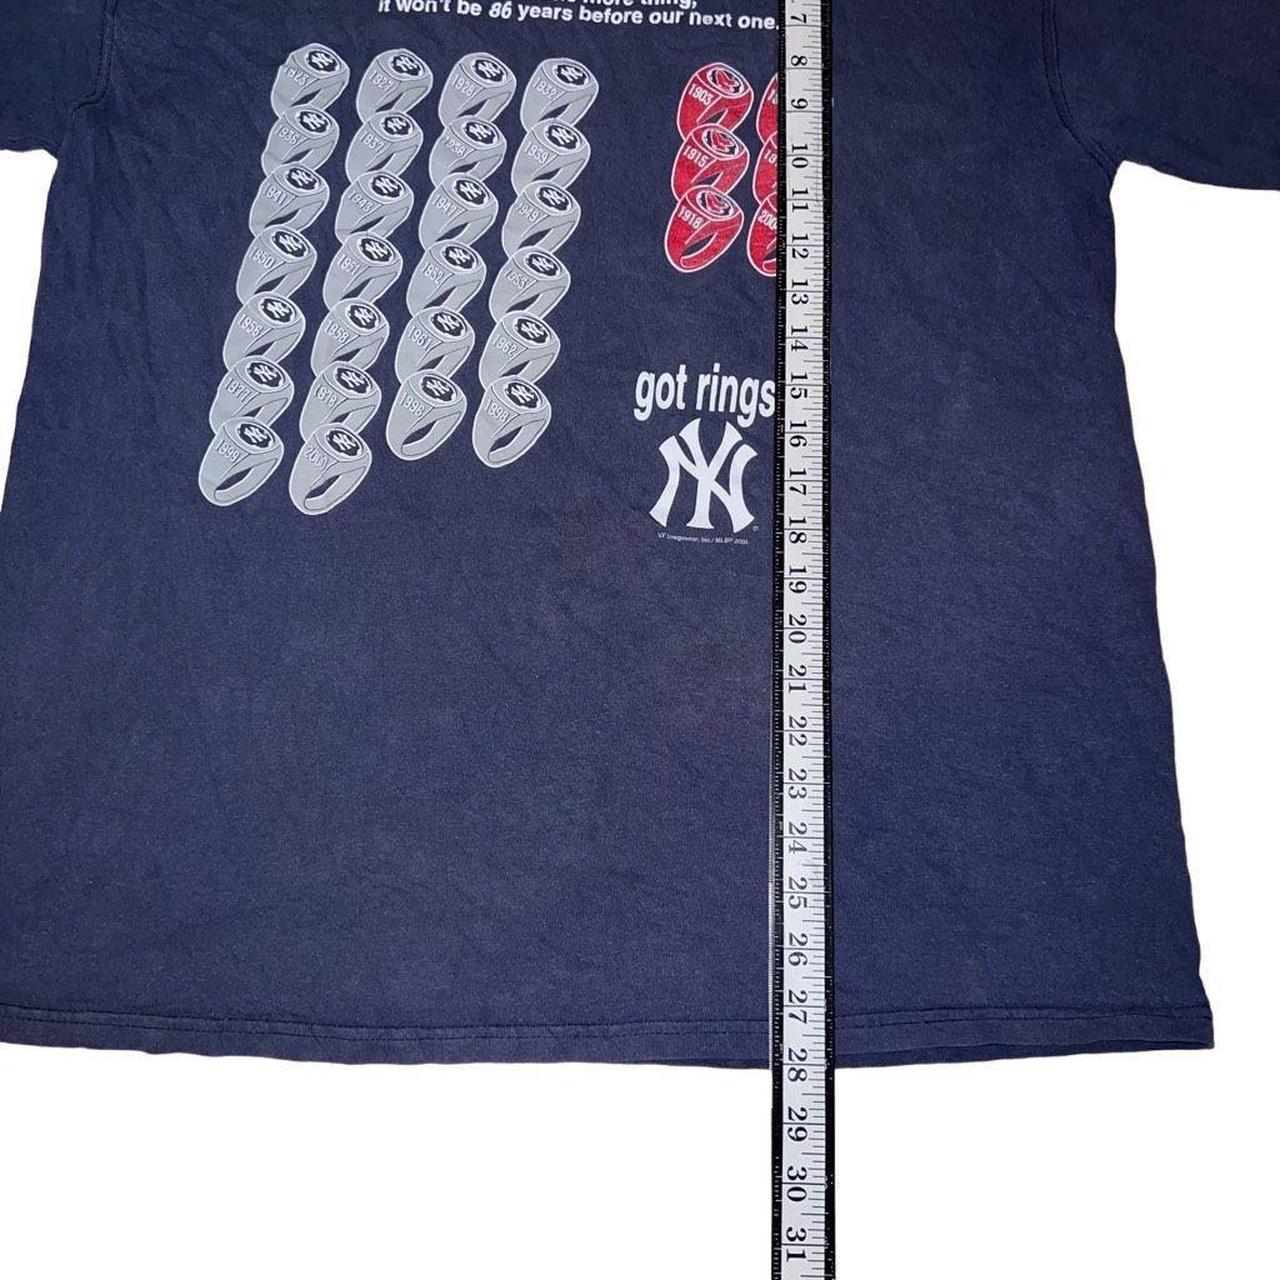 Vintage 2002 CSA New York Yankees Sleeveless Shirt - Depop